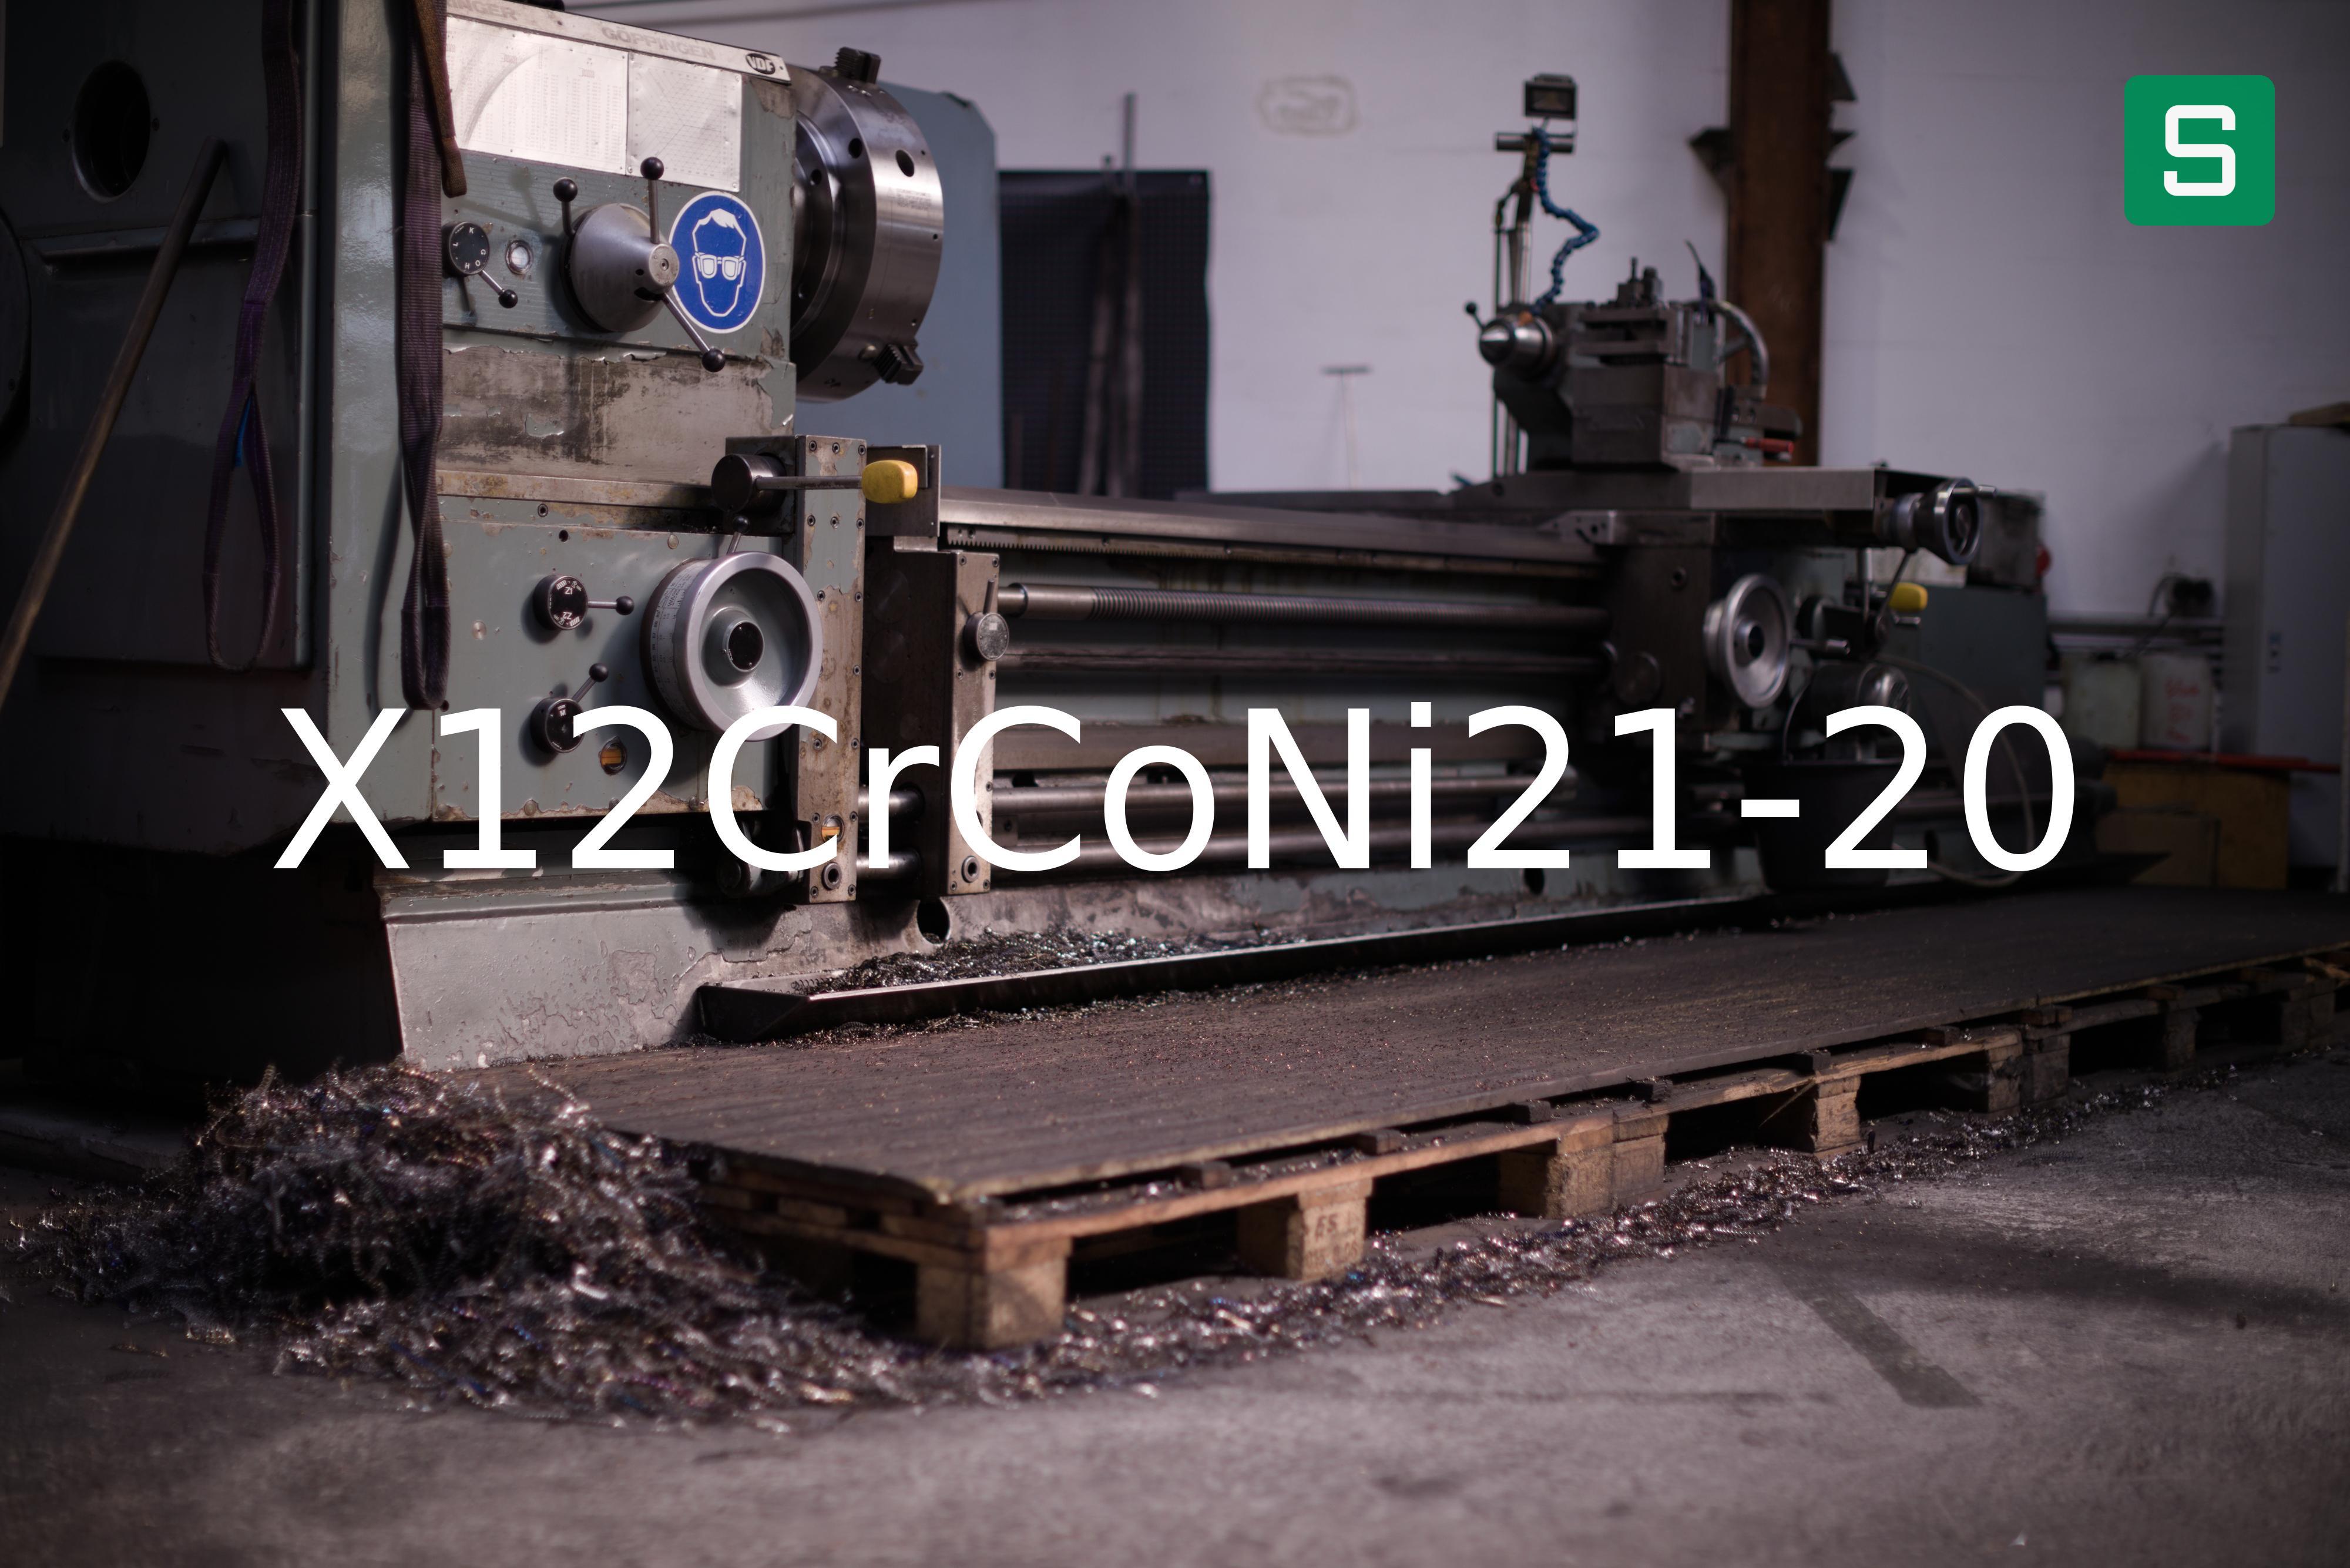 Steel Material: X12CrCoNi21-20